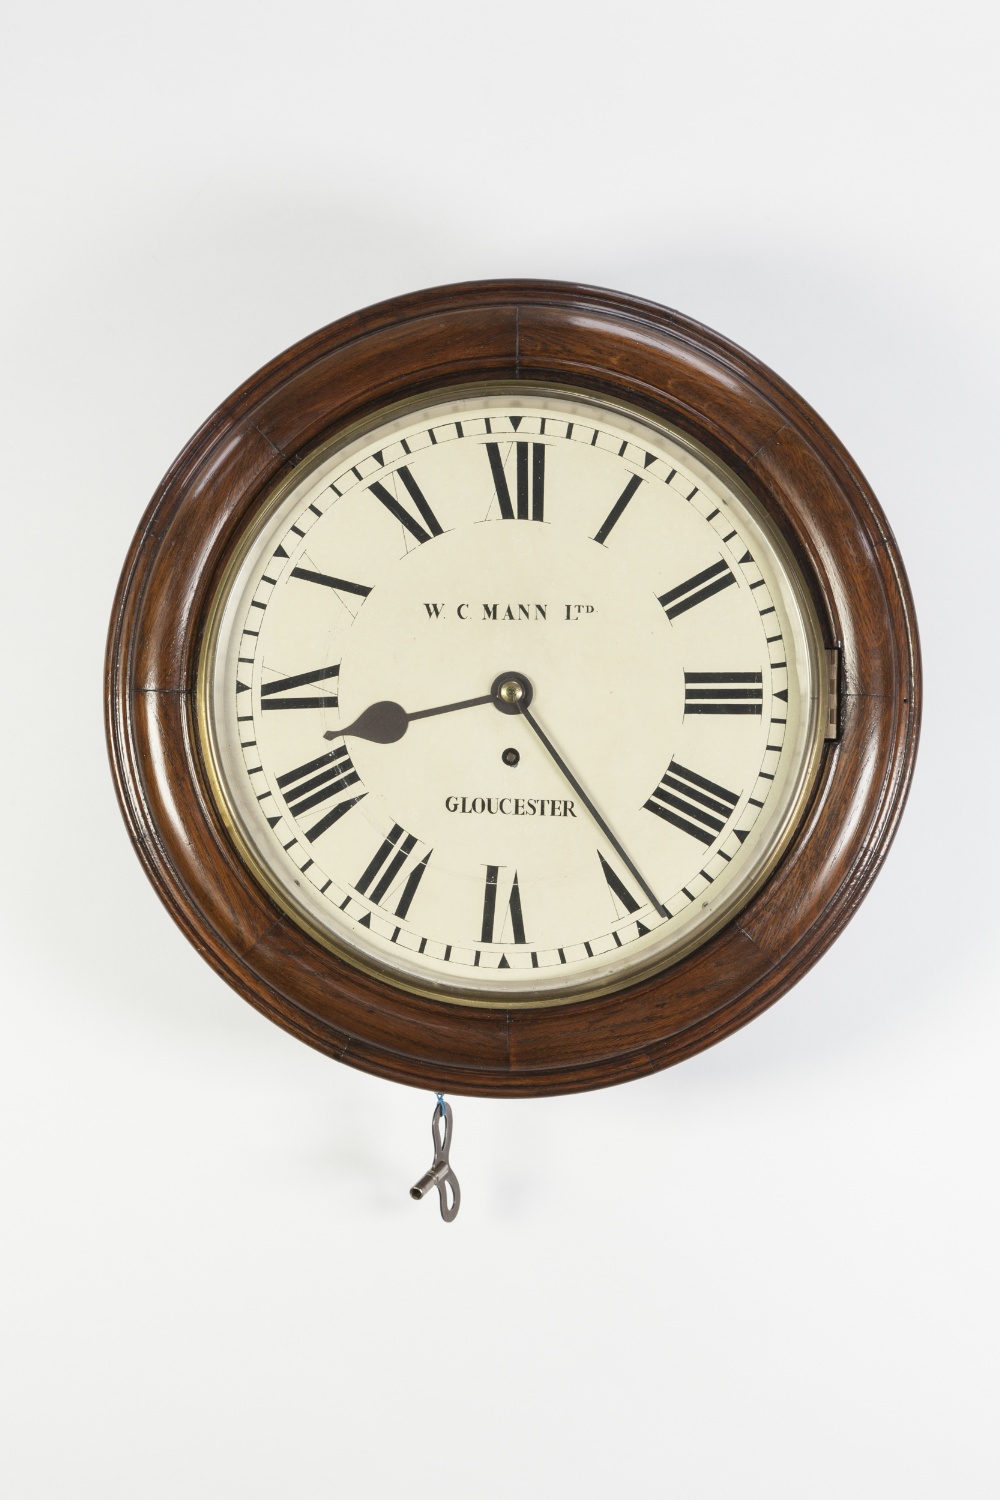 W.C. MANN Ltd, GLOUCESTER, EARLY TWENTIETH CENTURY WALL CLOCK, the 11 ½" painted Roman dial